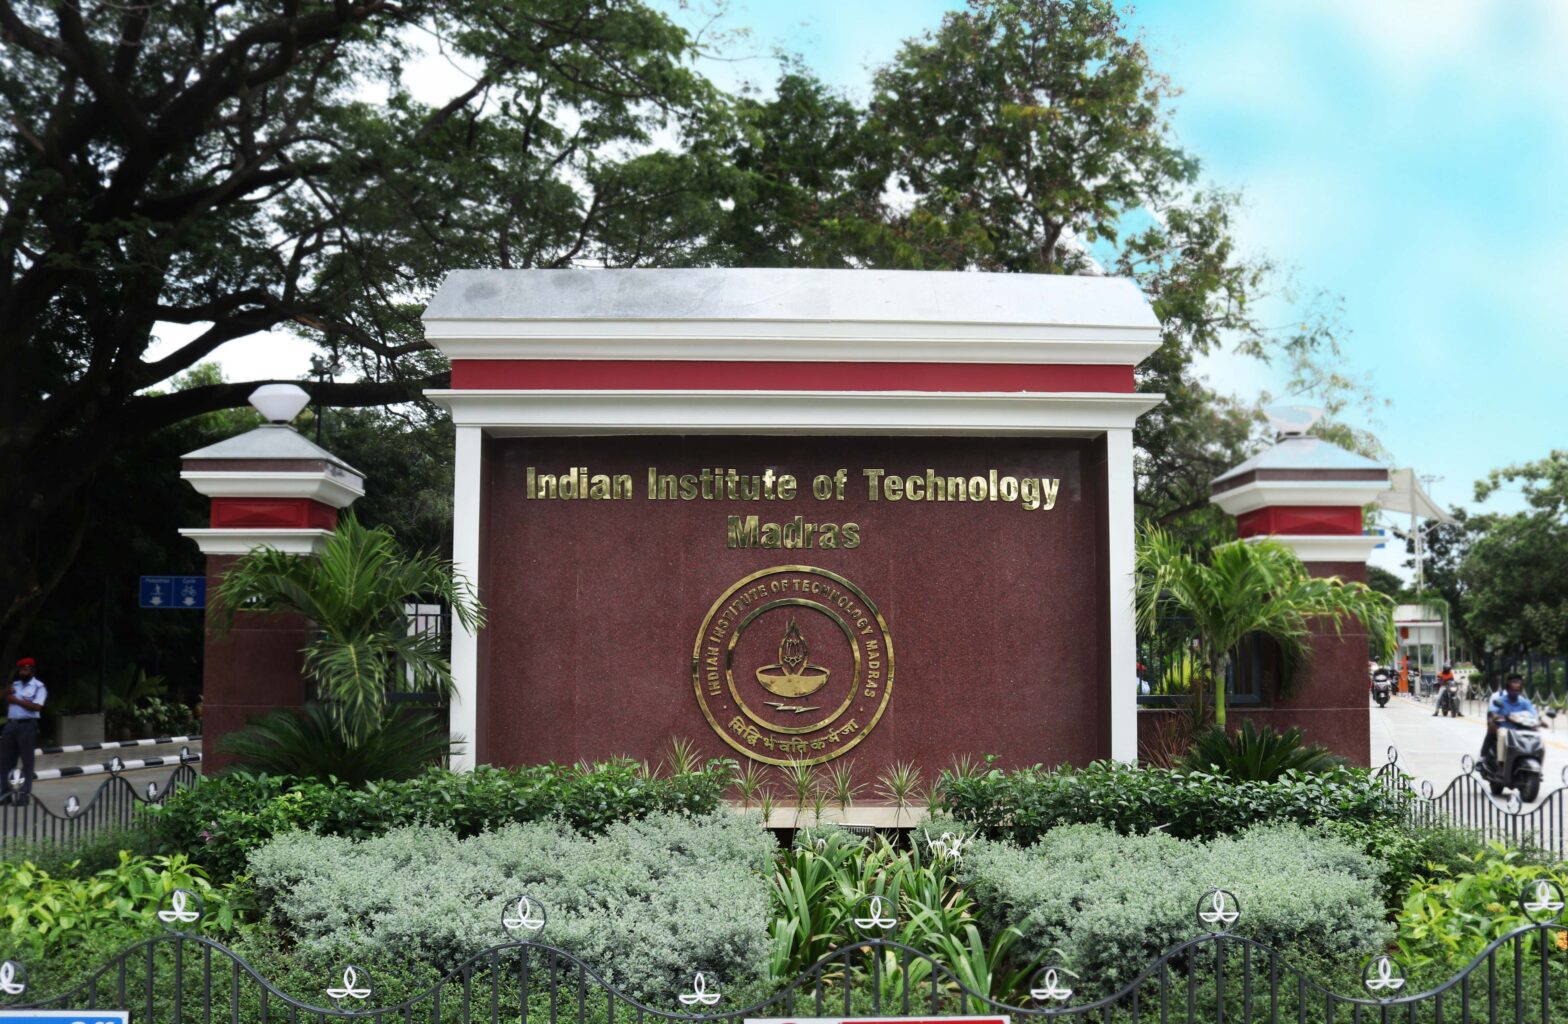 IIT Madras Main Gate 1 1568x1024 